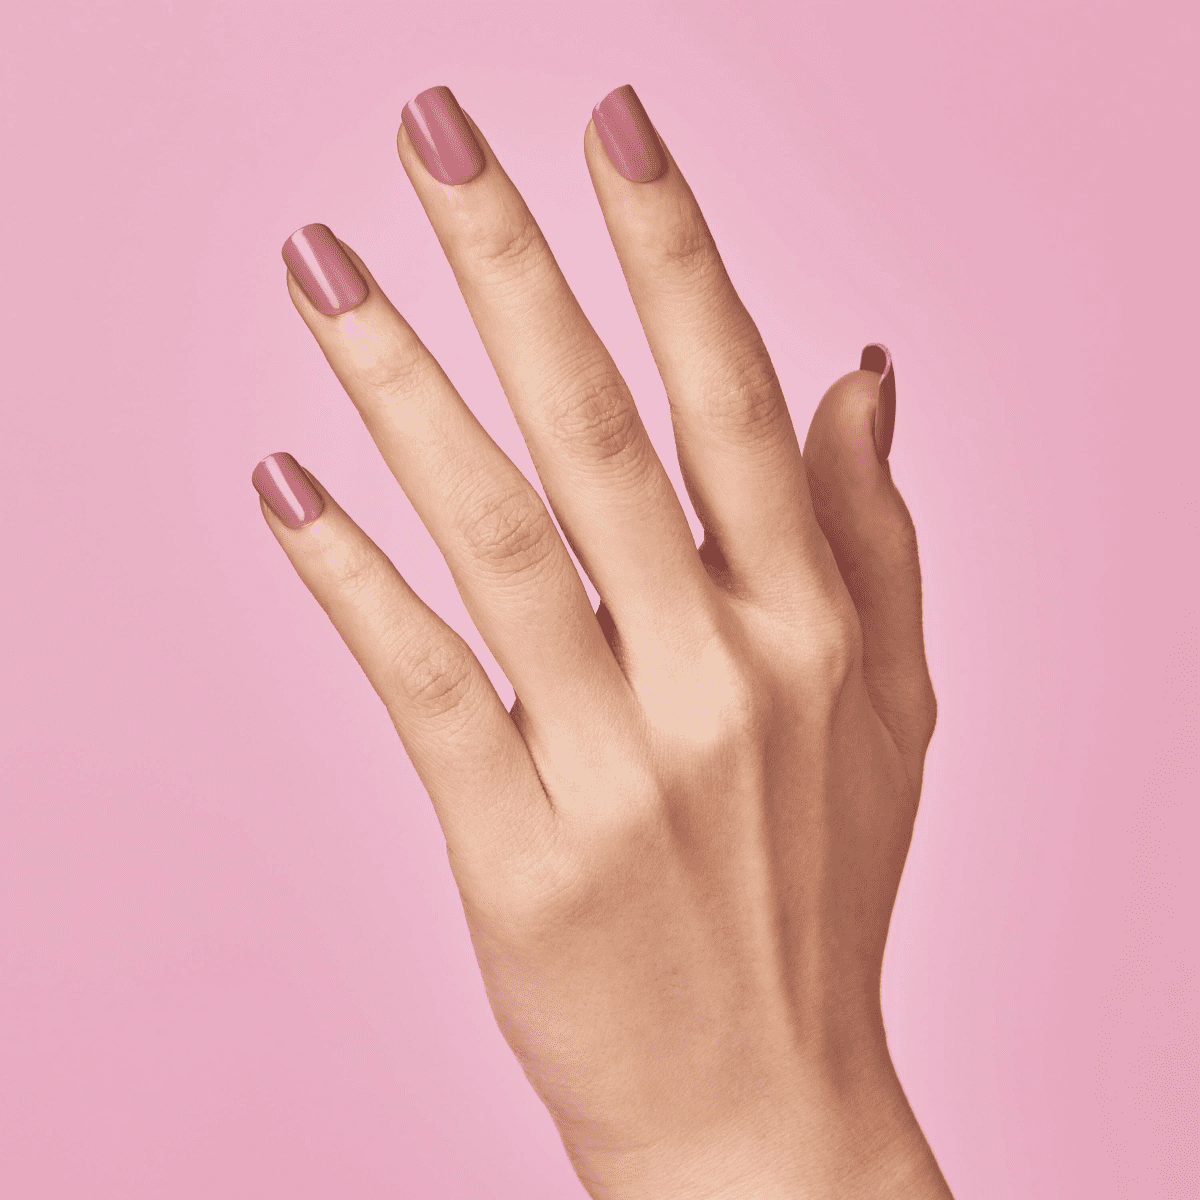 imPRESS Color Press-On Nails - Petal Pink